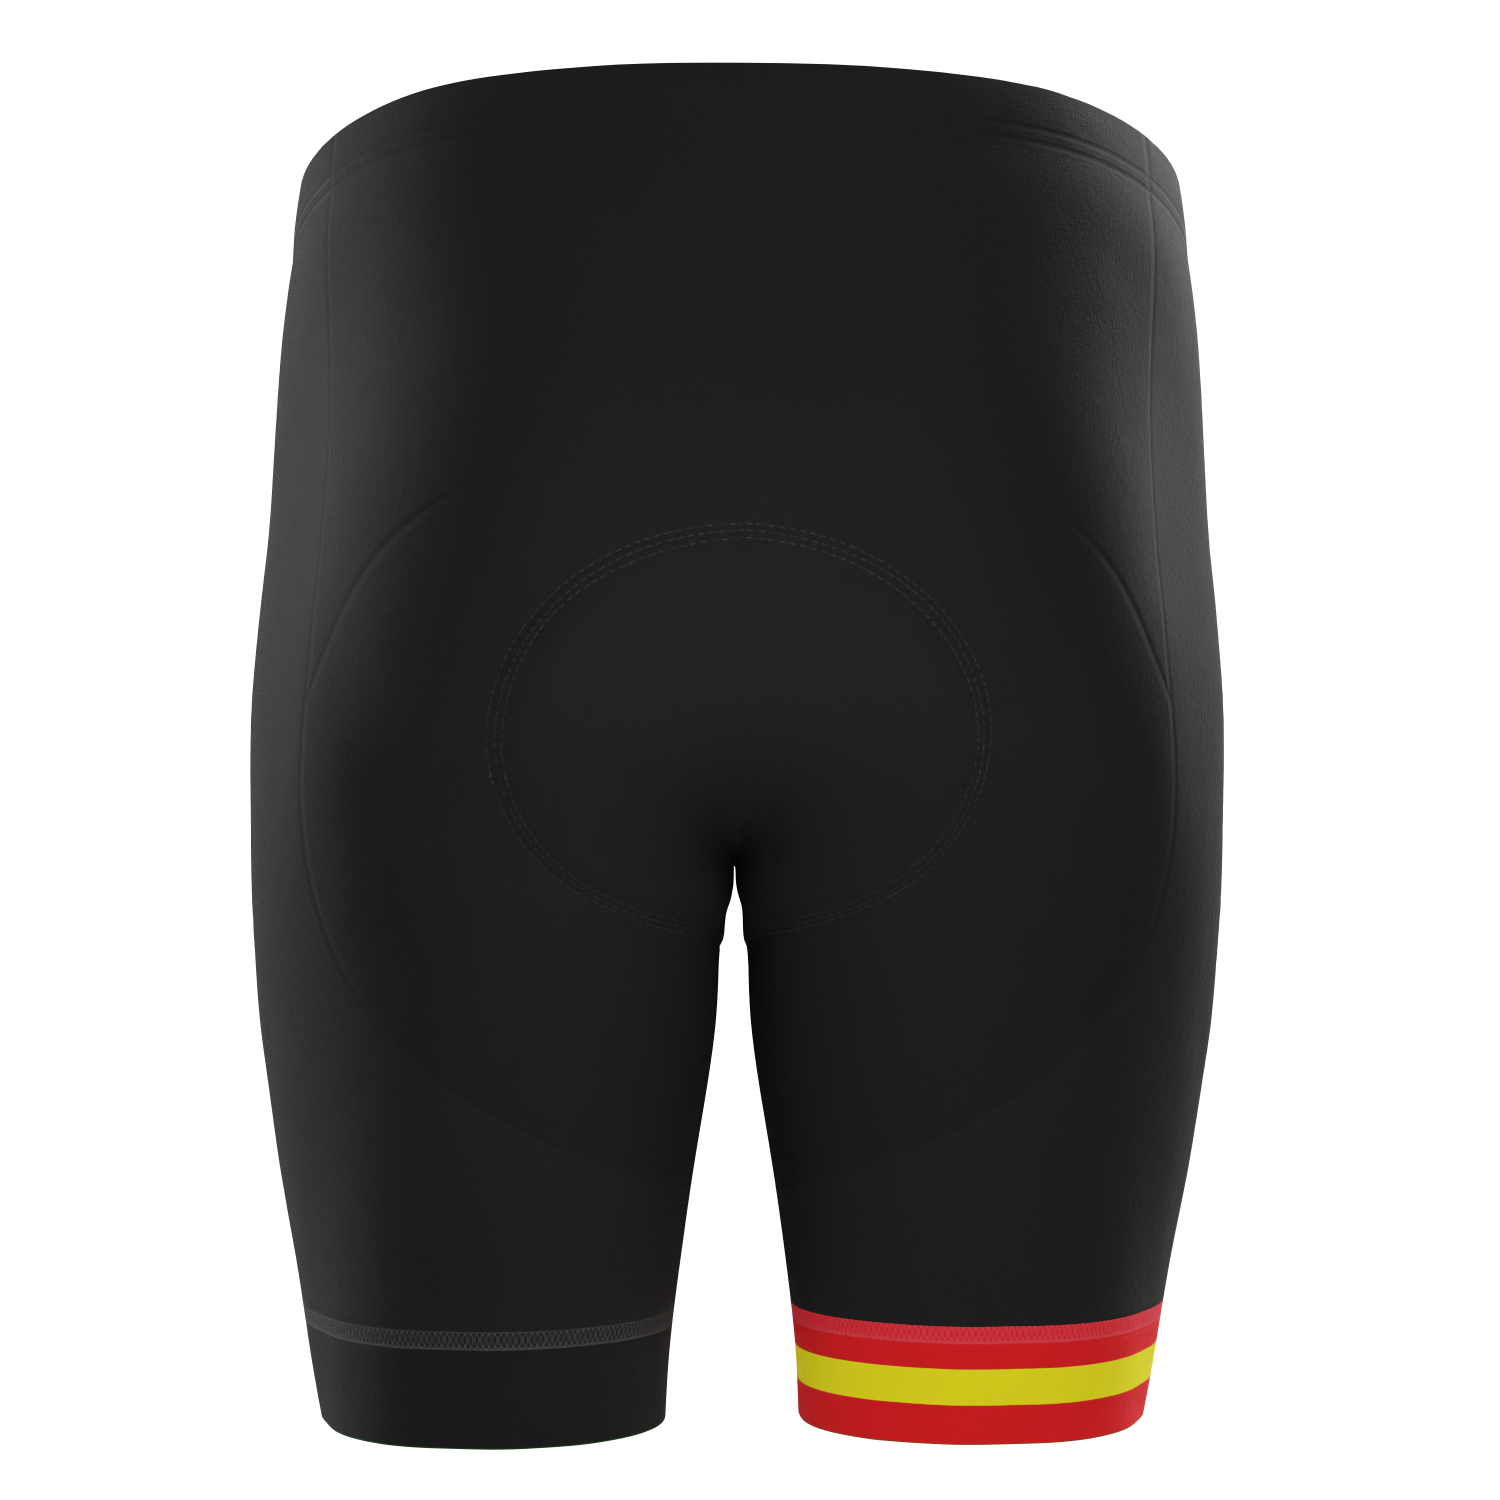 Men's España Spanish National Flag Gel Padded Cycling Shorts